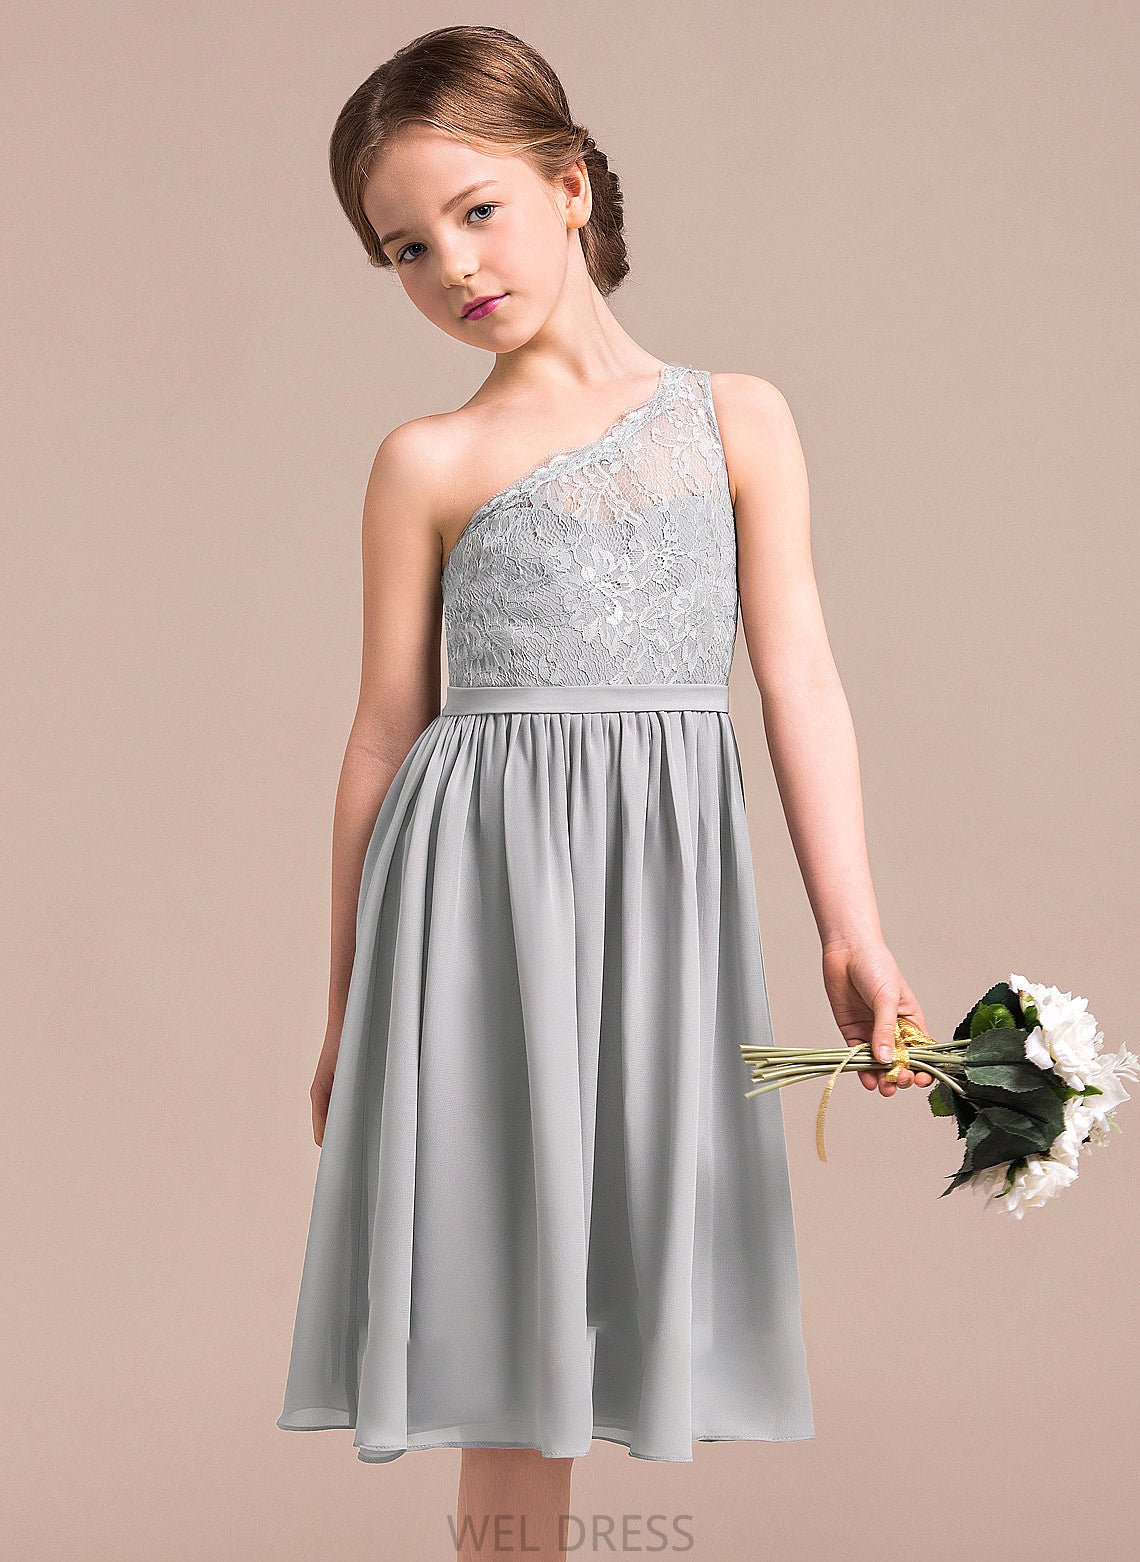 Lace One-Shoulder Junior Bridesmaid Dresses A-Line Knee-Length Chiffon Abbigail